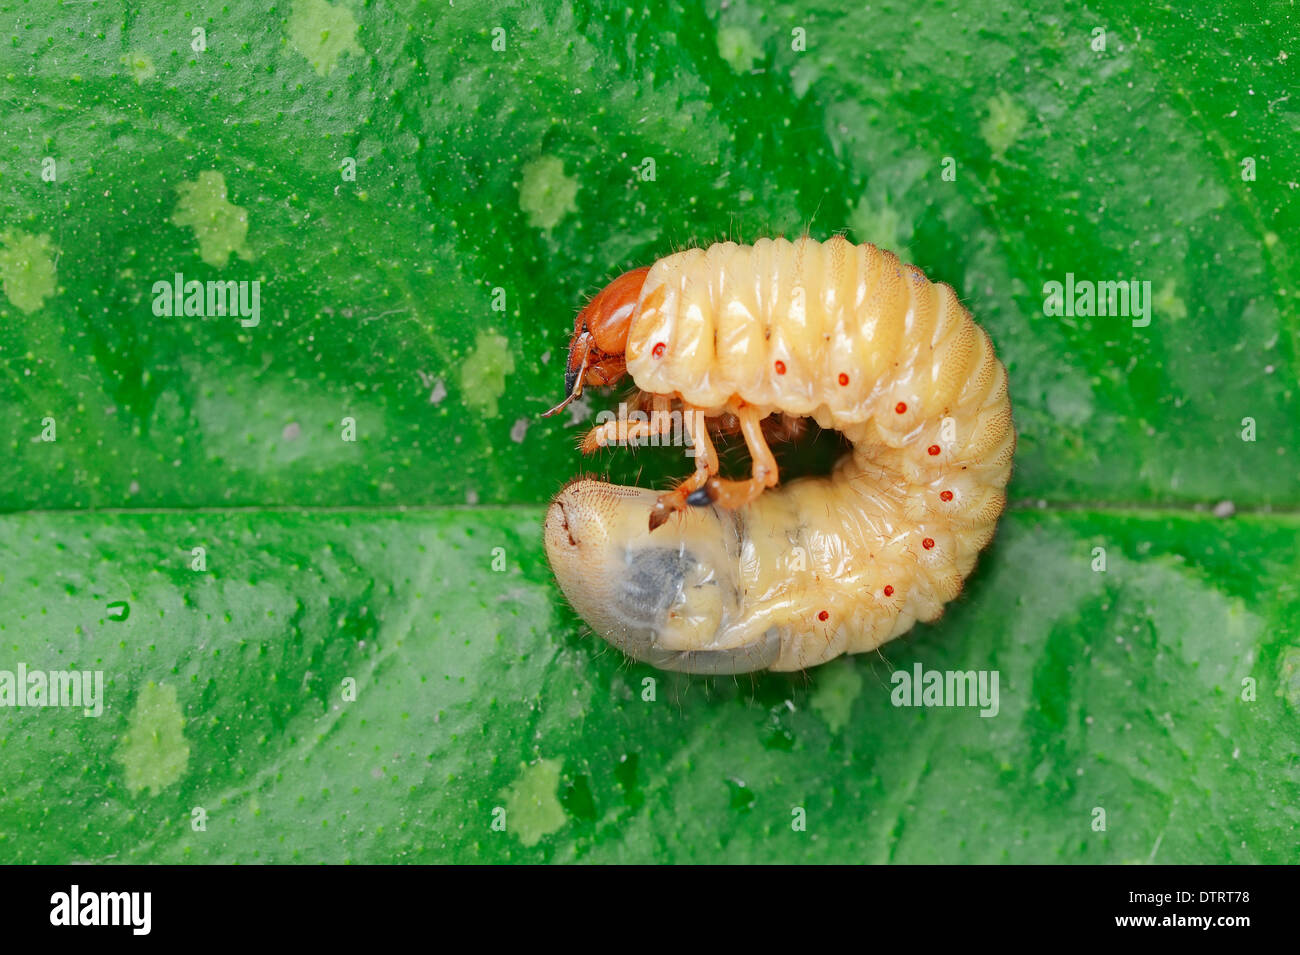 Common Cockchafer, larva, North Rhine-Westphalia, Germany / (Melolontha melolontha) / Maybug Stock Photo